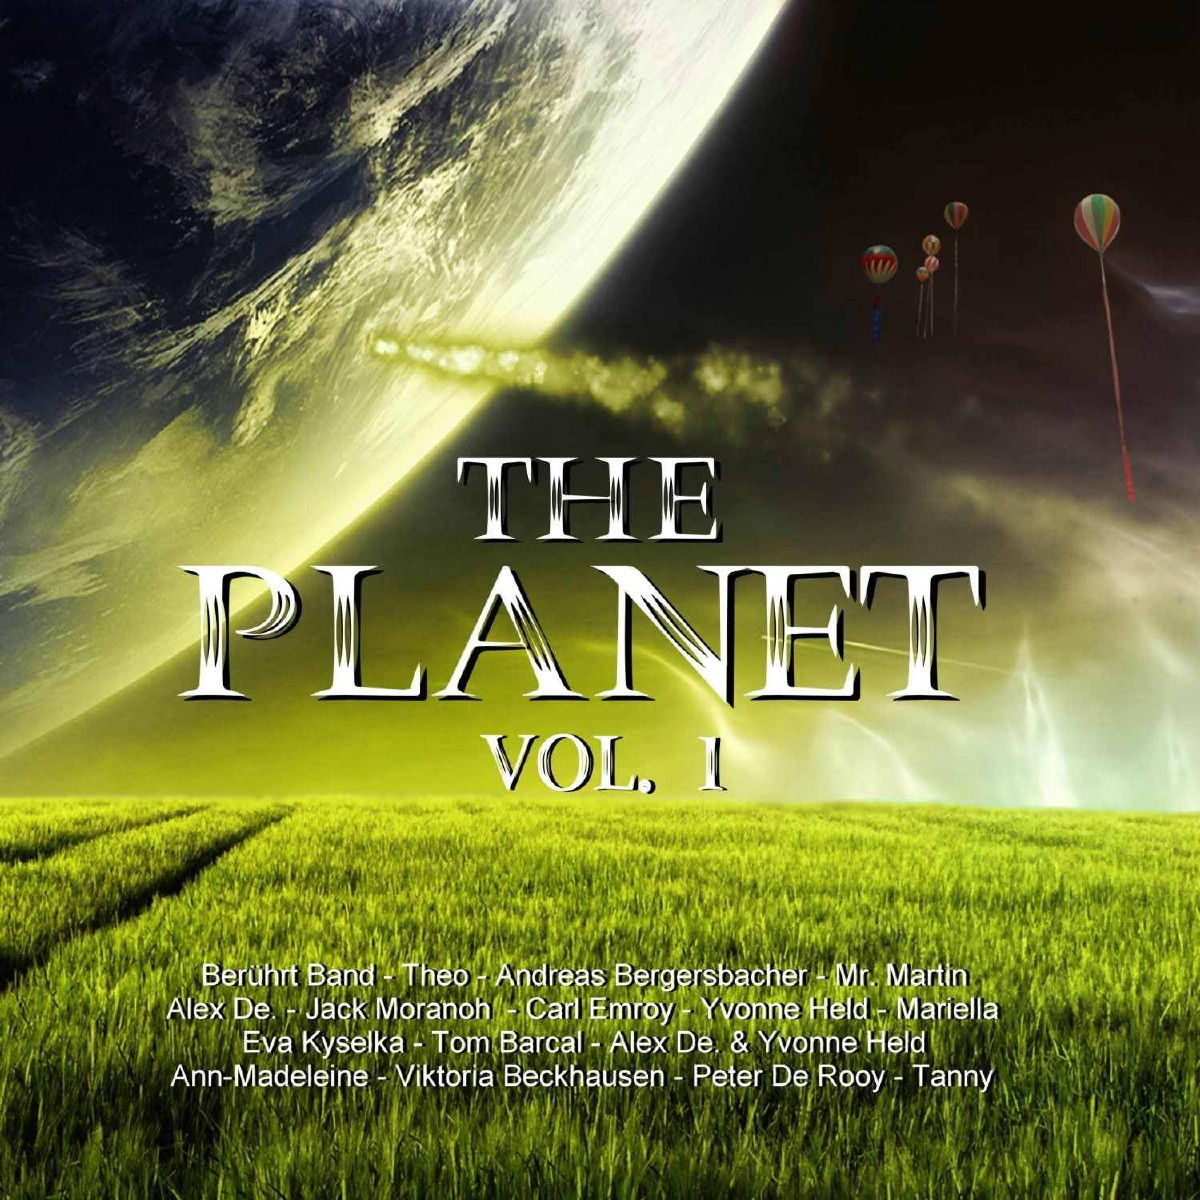 The Planet Vol.1 Andreas Bergersbacher 